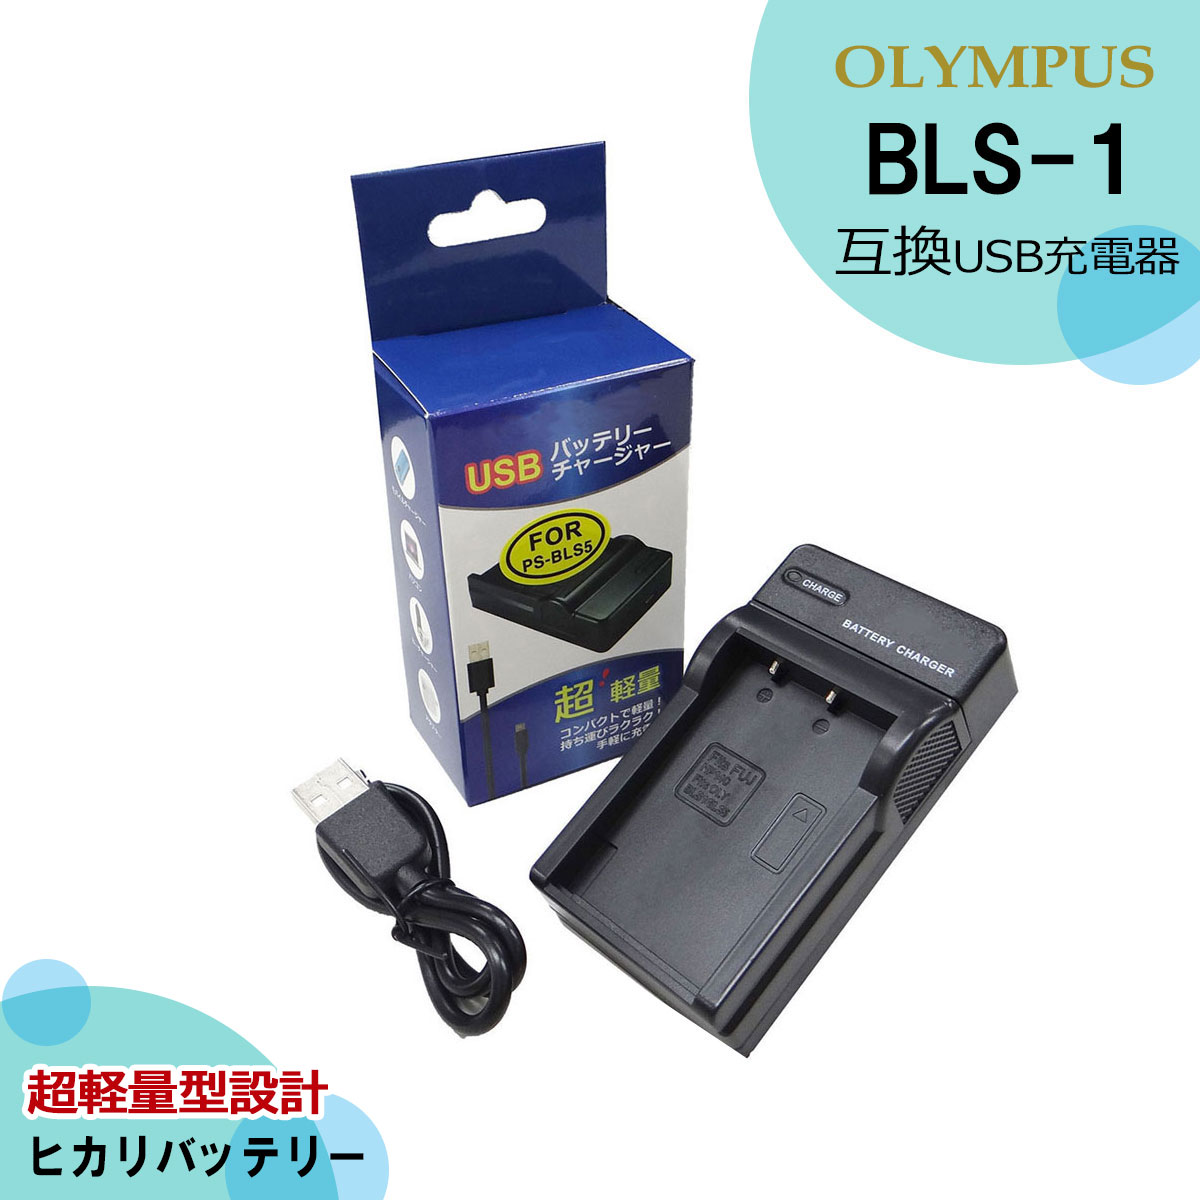 BLS-1【あす楽対応】オリンパス OLYMPUS 　互換充電器USBチャージャーBCS-1 BCS-5 「純正互換共に対応」E-400 / E-410 / E-420 / E-450 / E-620 / E-M10　E-P1 / E-P2 / E-P3 / E-PL1 / E-PL1s / E-PL2